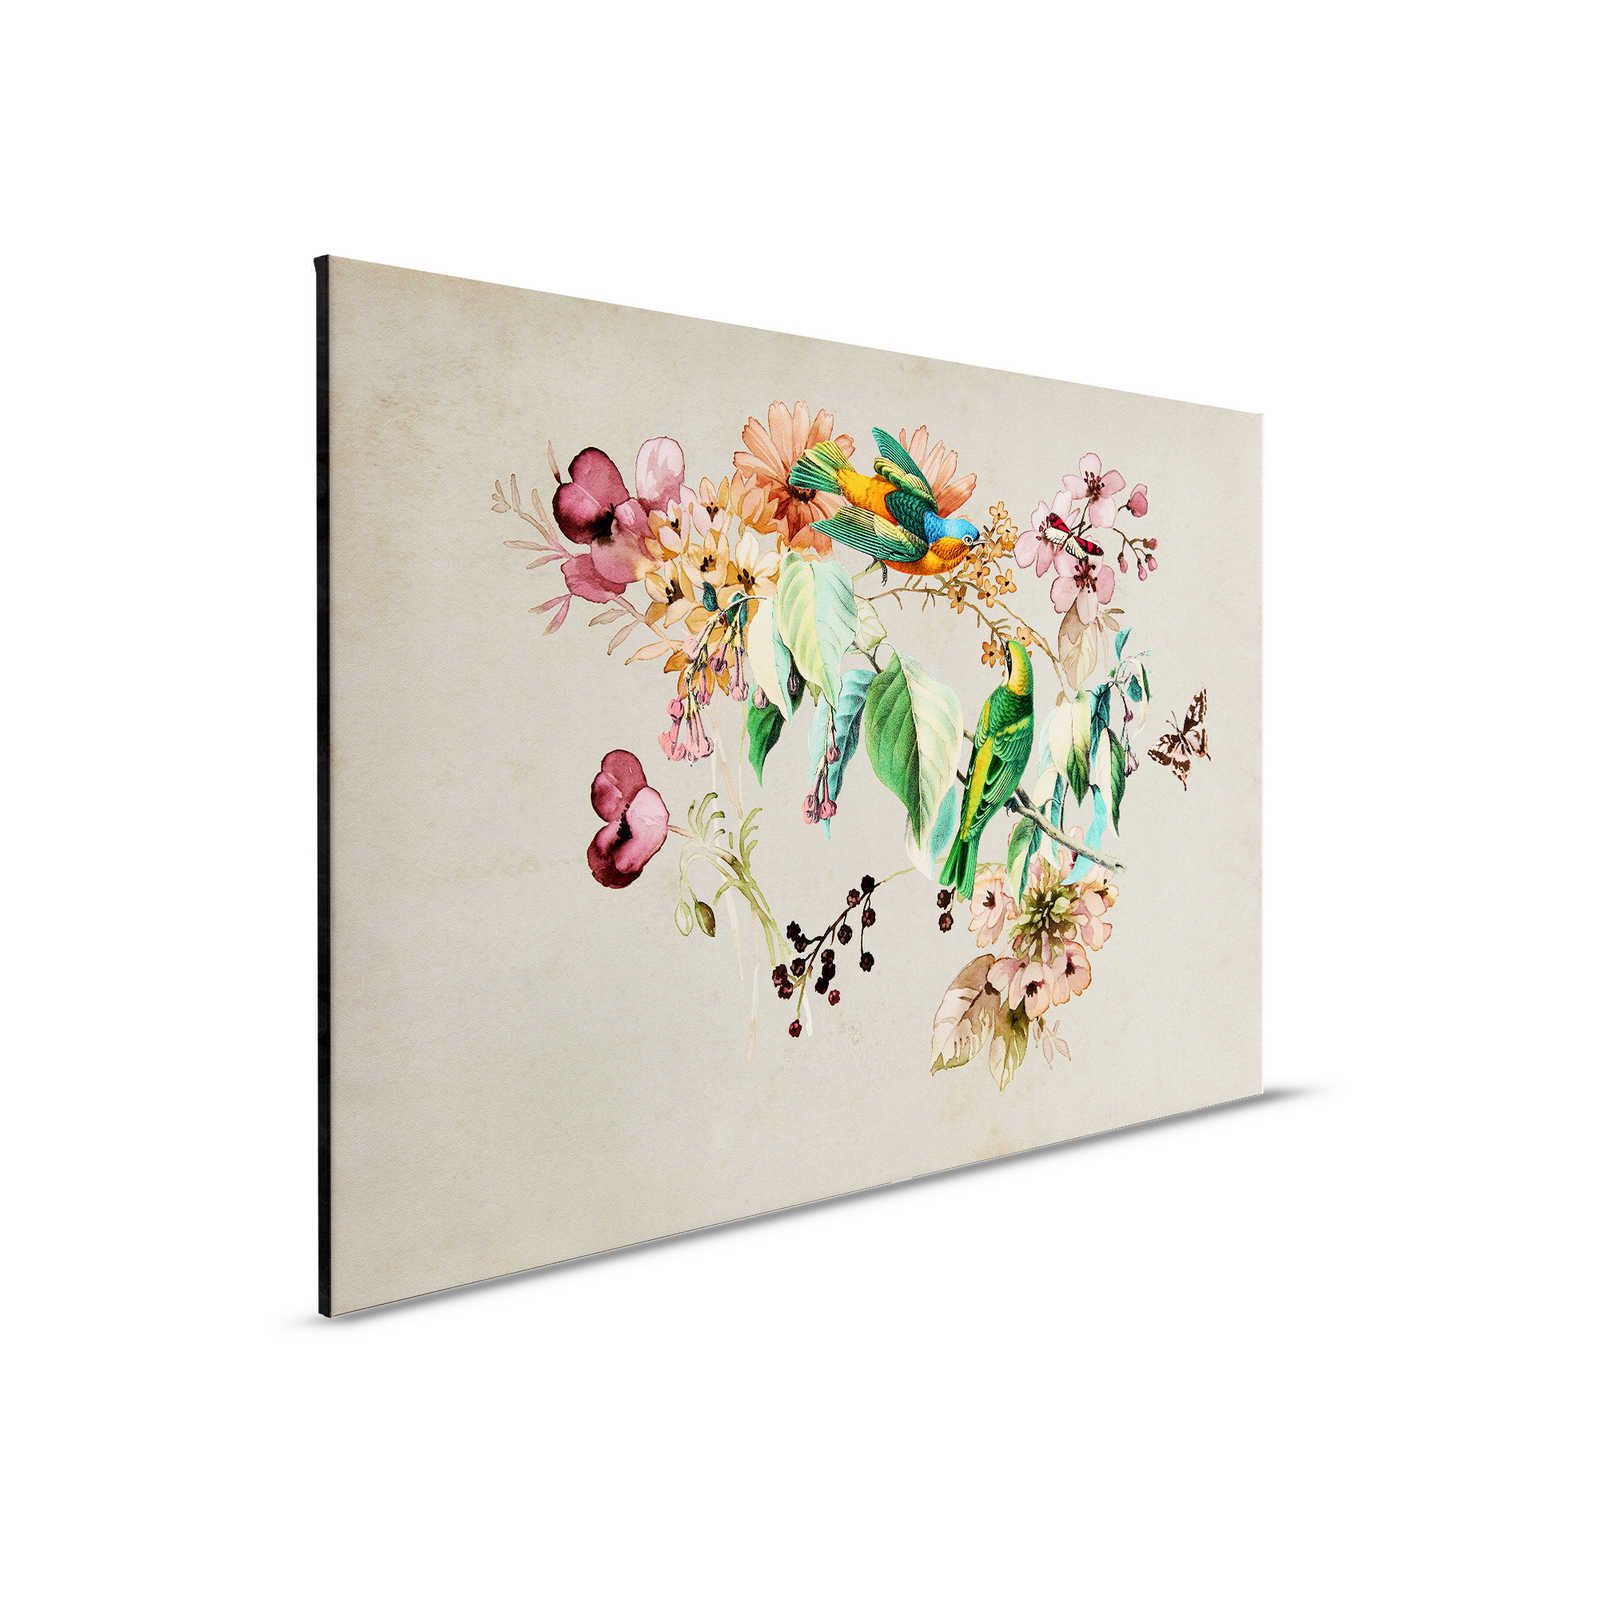 Love Nest 1 - Leinwandbild mit Aquarell Blüten & bunten Vögeln – 0,90 m x 0,60 m
